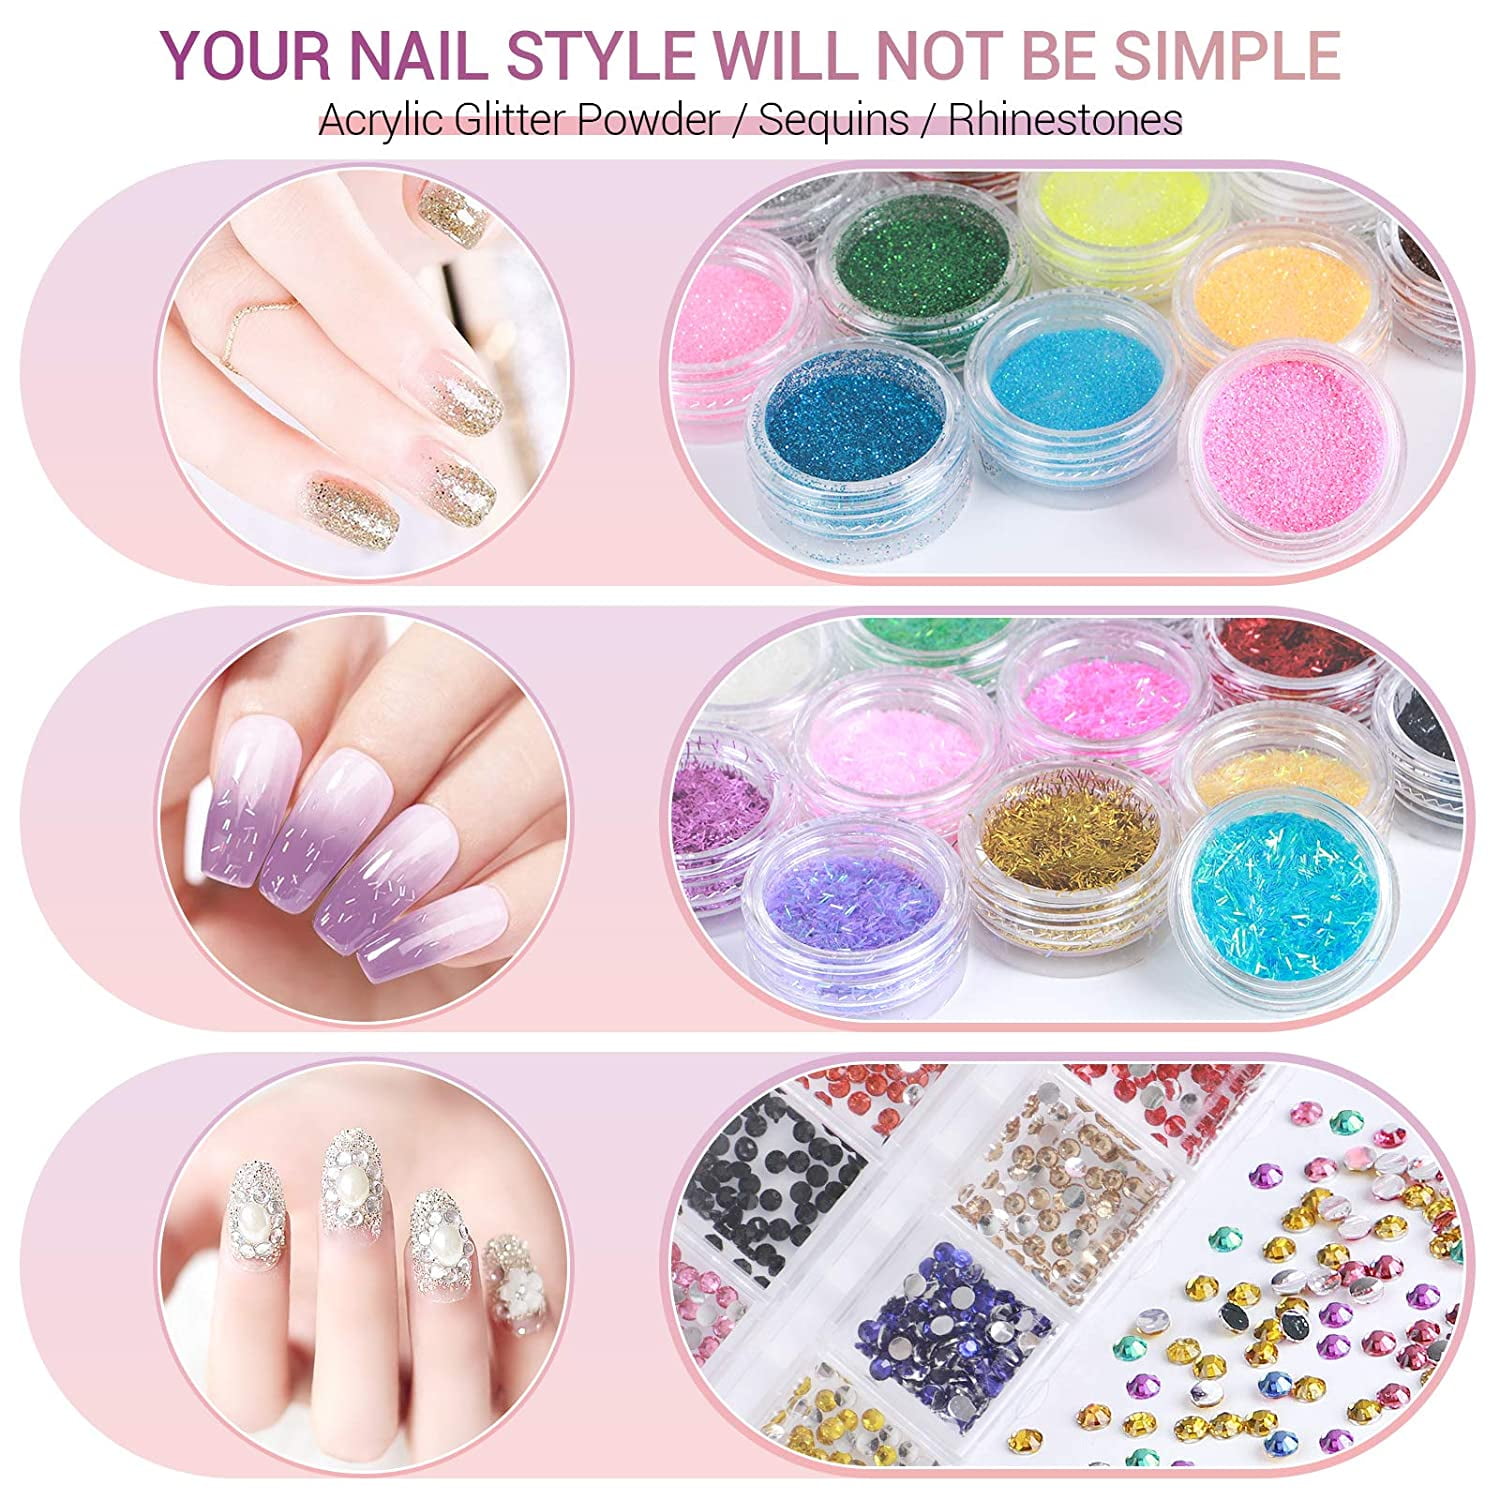 SkyAuks Acrylic Nail Art Kit Tools, Nail Design Kit with 2000pcs Nails Crystals Glitter Rhinestones, Double-End Art Dotting Pen, Nail Art Brushes, 1mm Nail